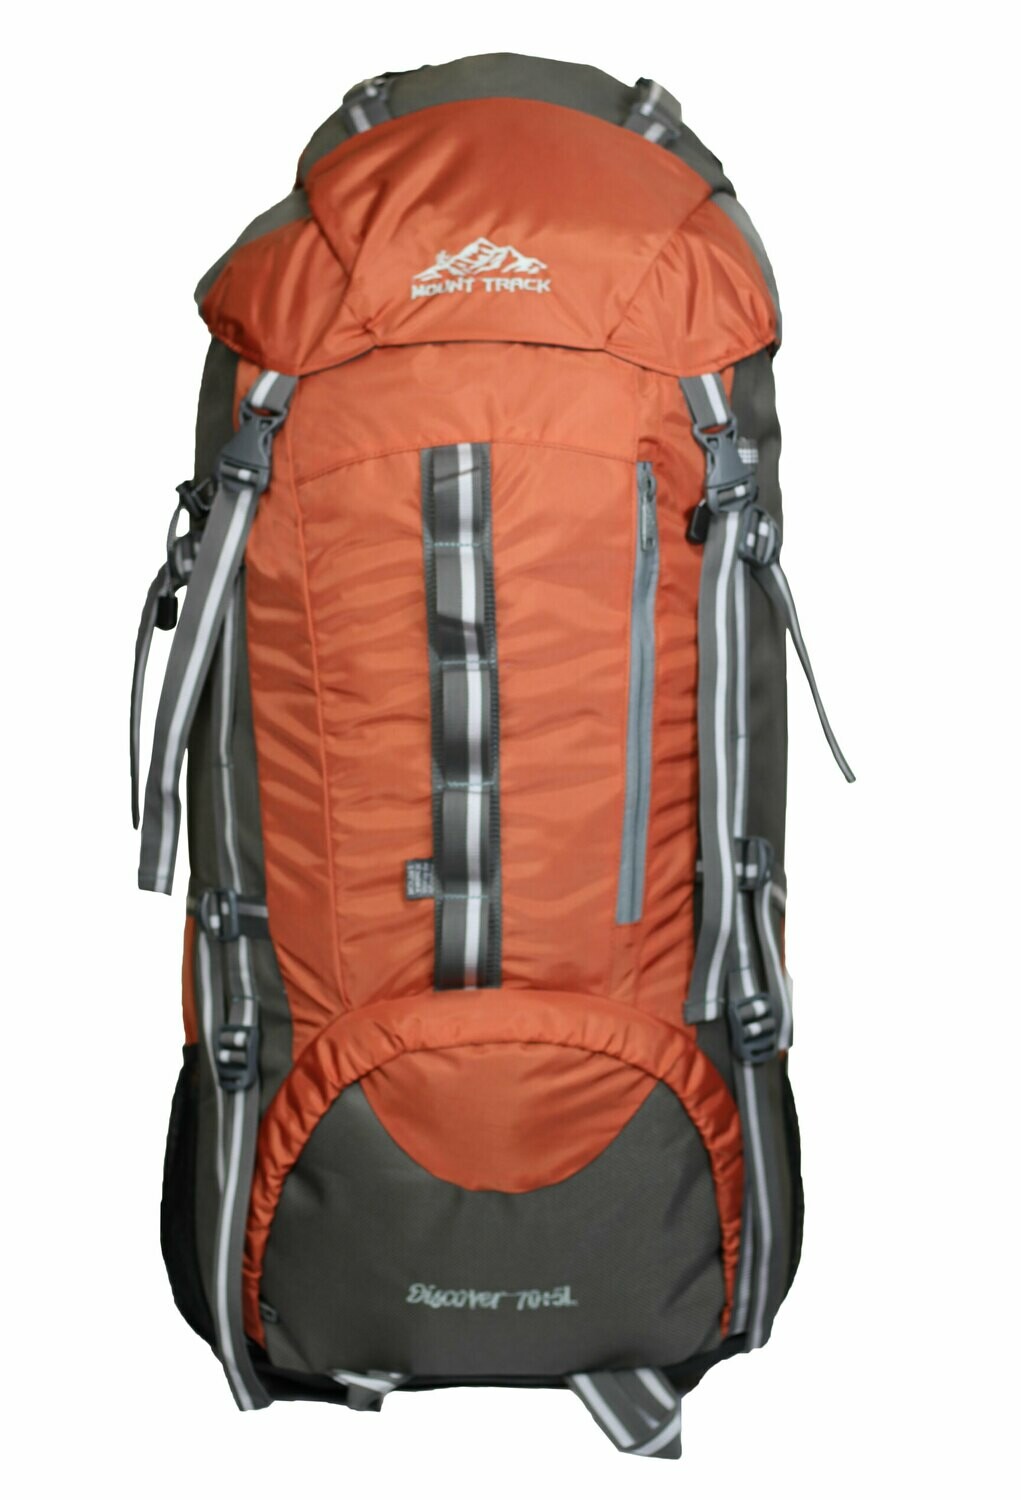 Mount Track, backpack, rucksack, trekking hiking bag